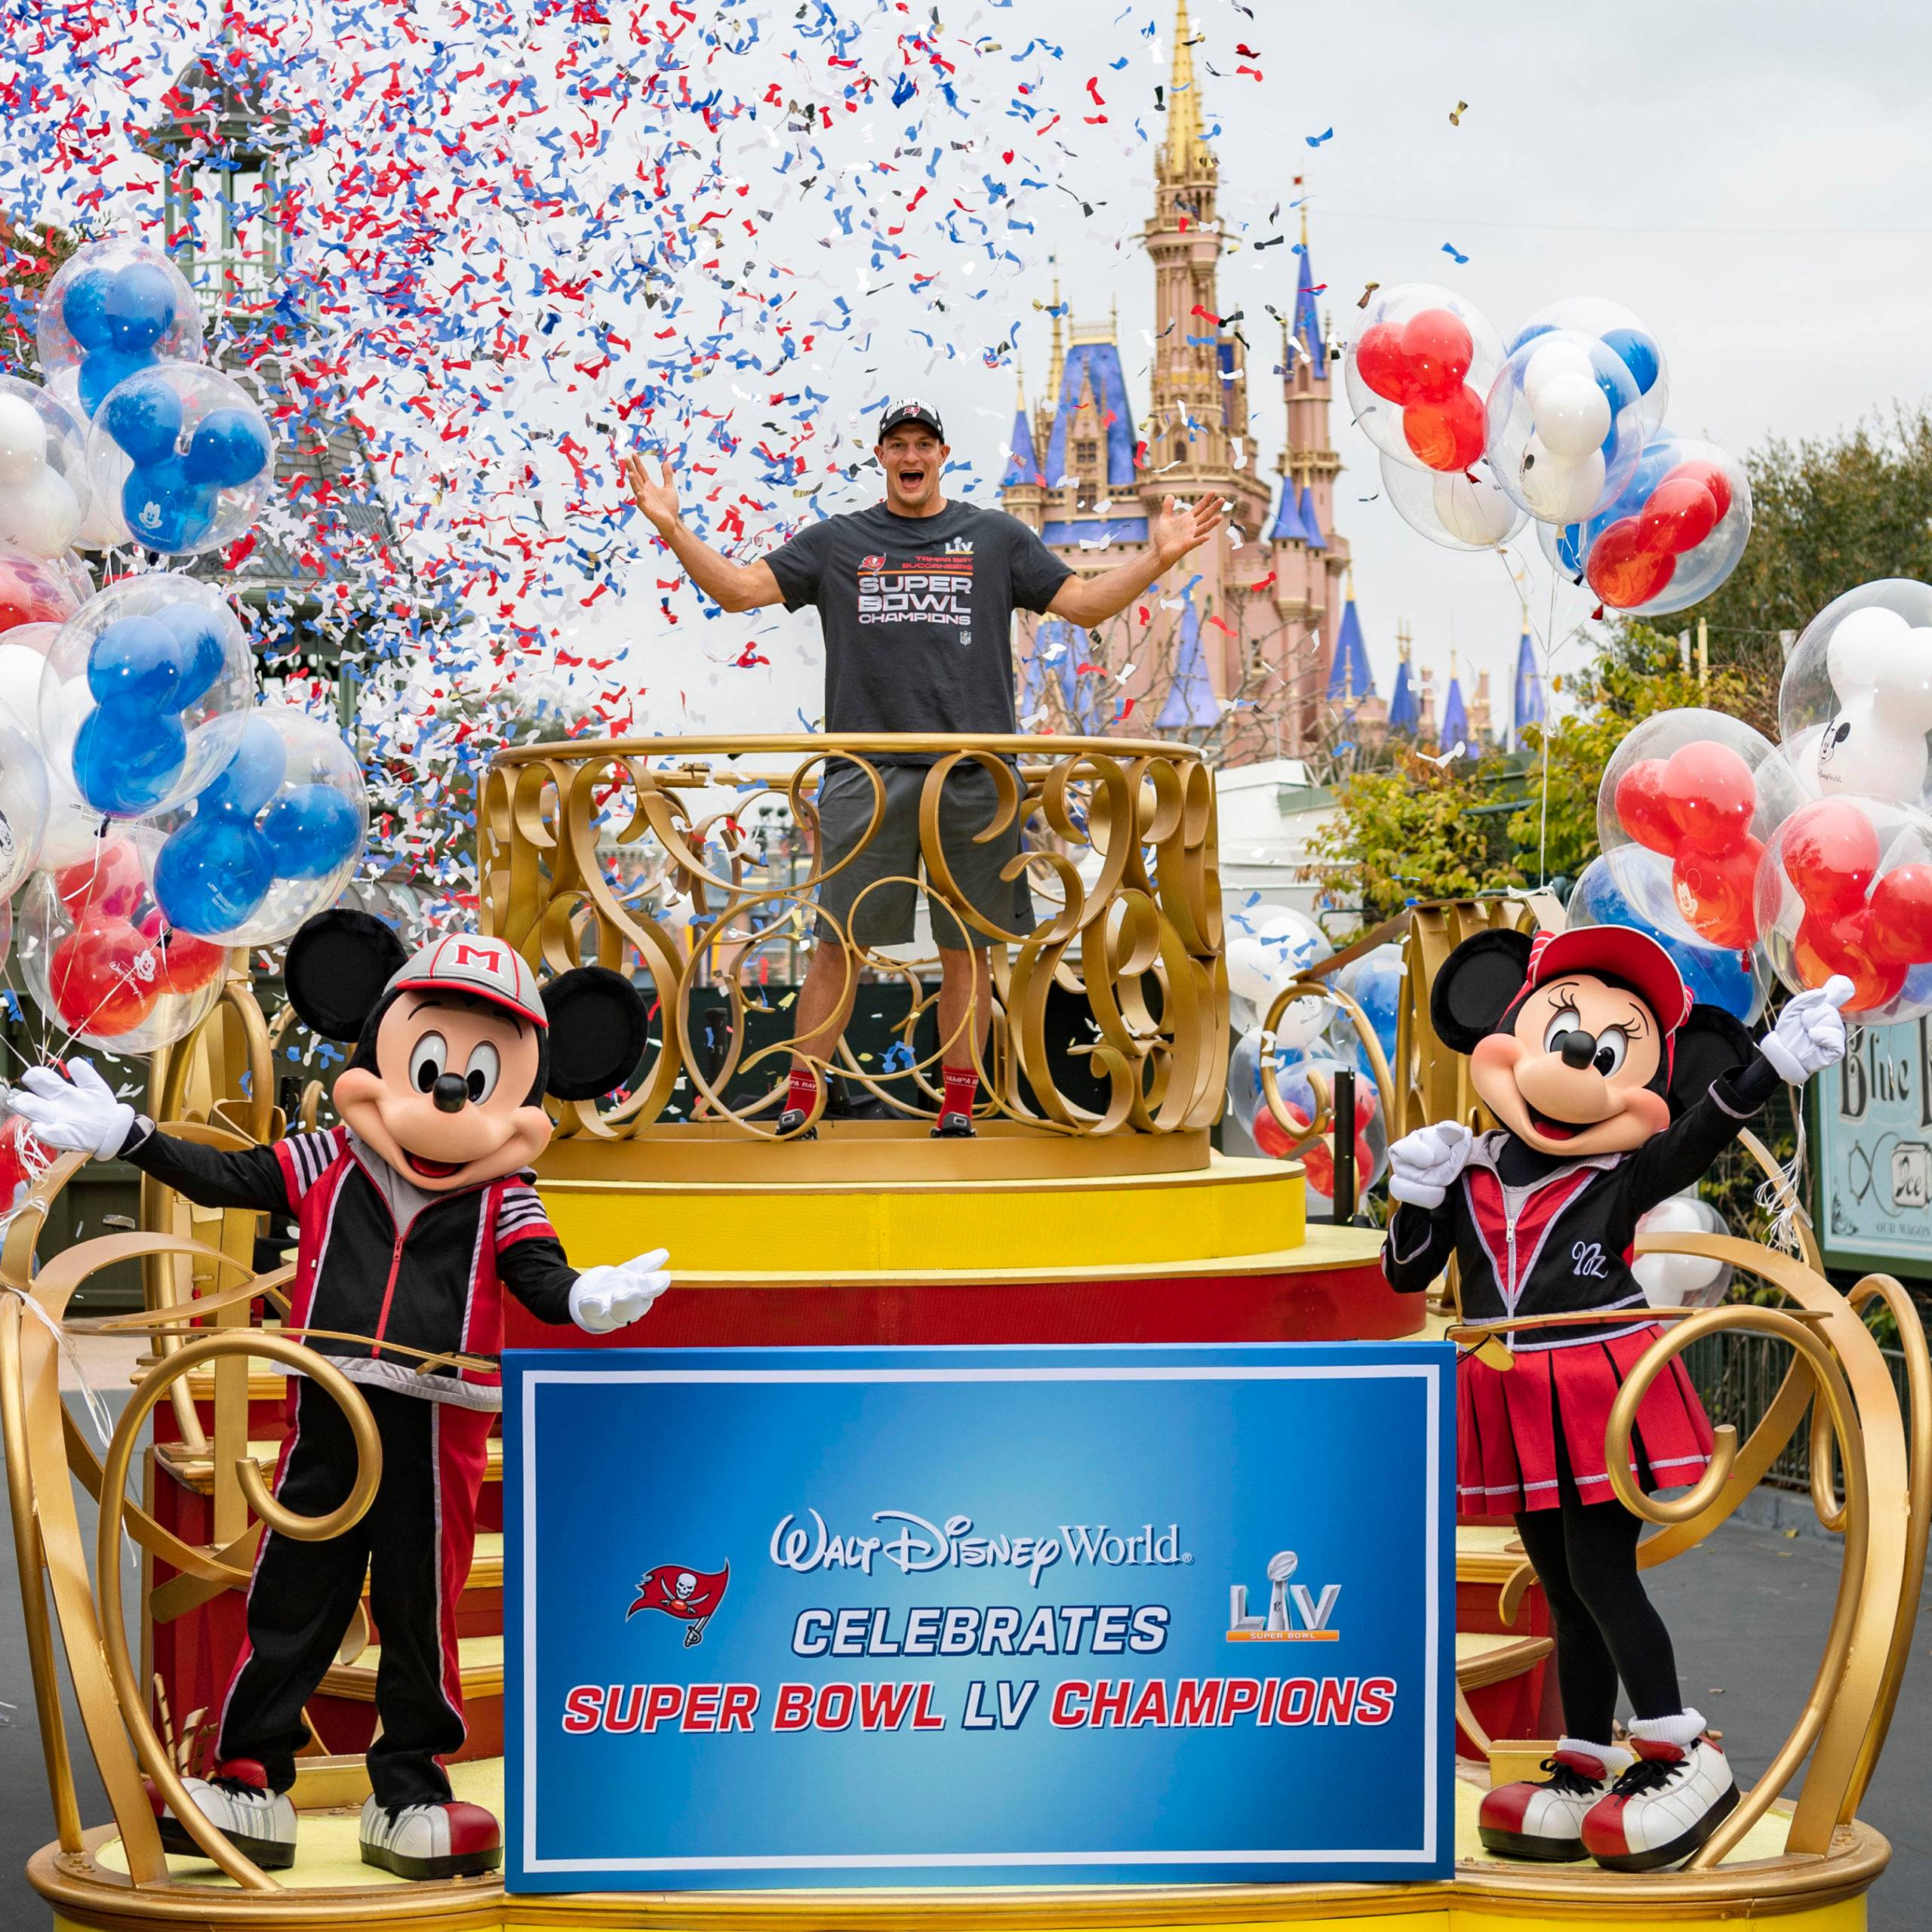 Rob Gronkowski visits Walt Disney World after Super Bowl LV victory